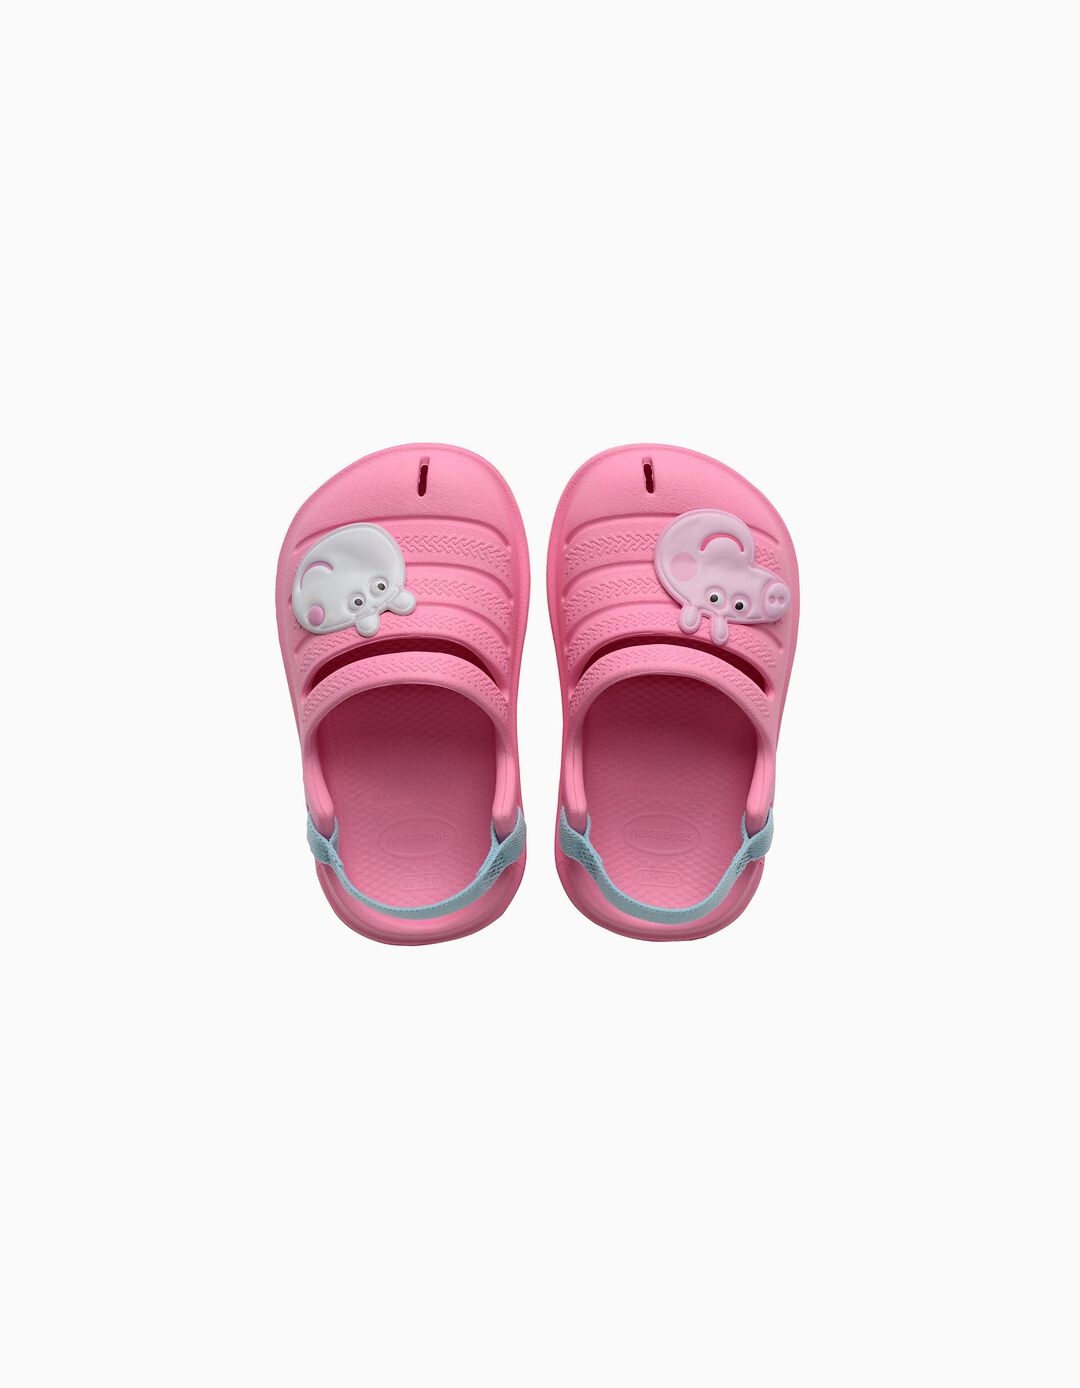 Peppa Pig' 'Havaianas' Clog Sandals, Baby Girls, Pink